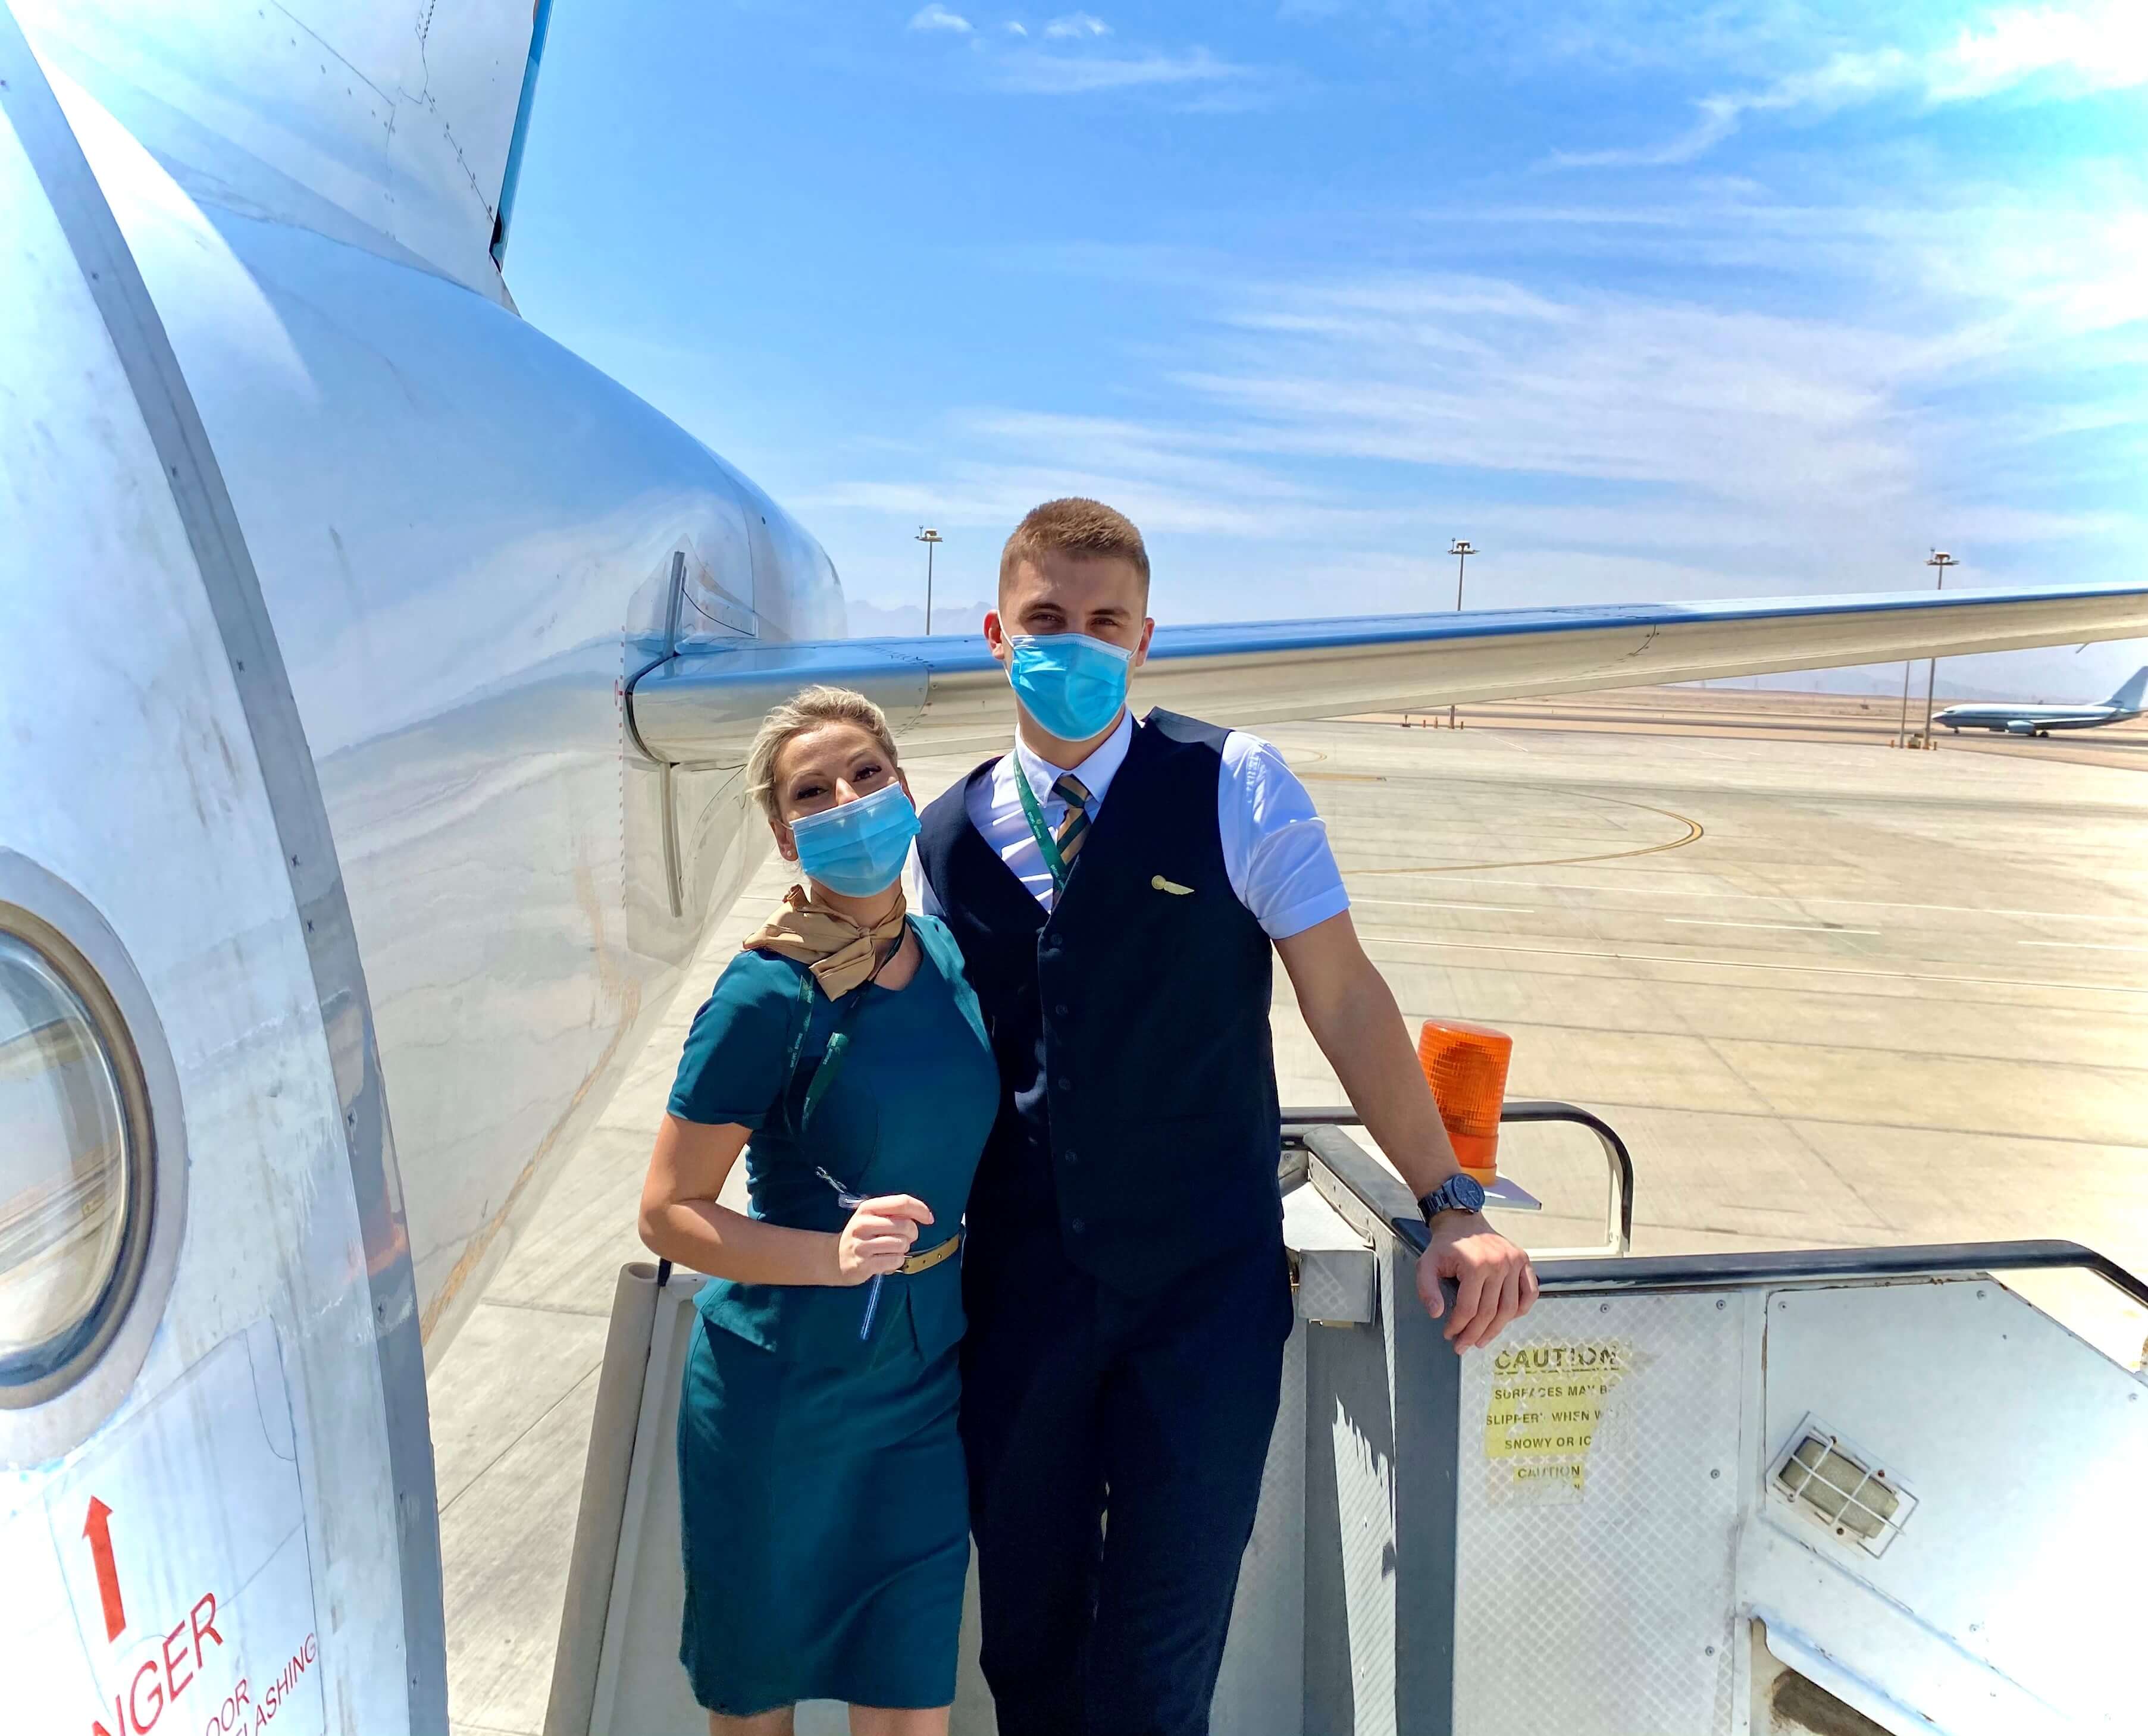 Flight attendant Goda returns to aviation post-pandemic, ignites 